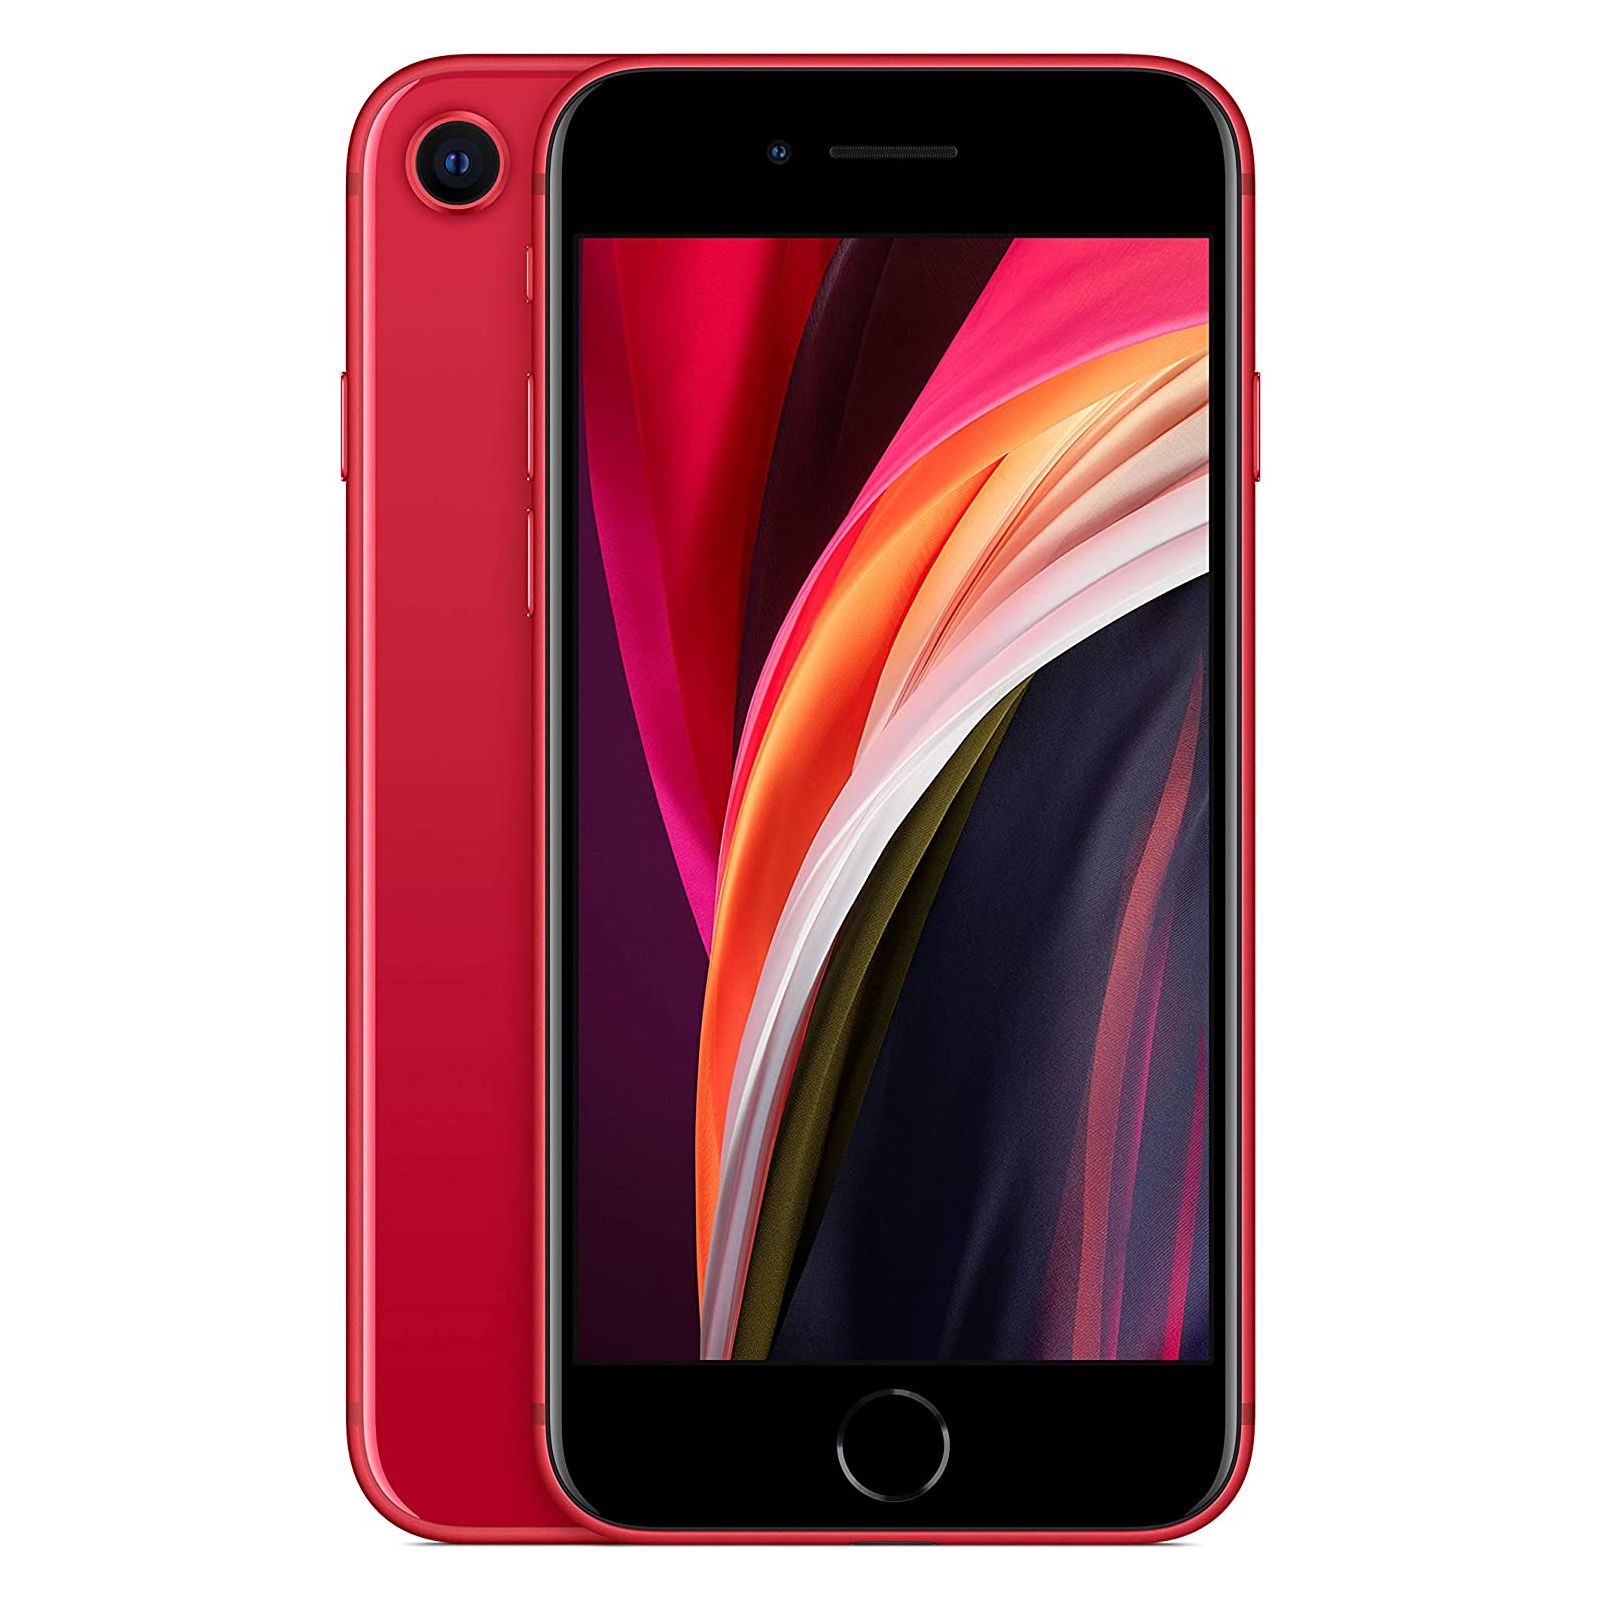 Smartphone Apple iPhone SE (2020) 64GB rosso